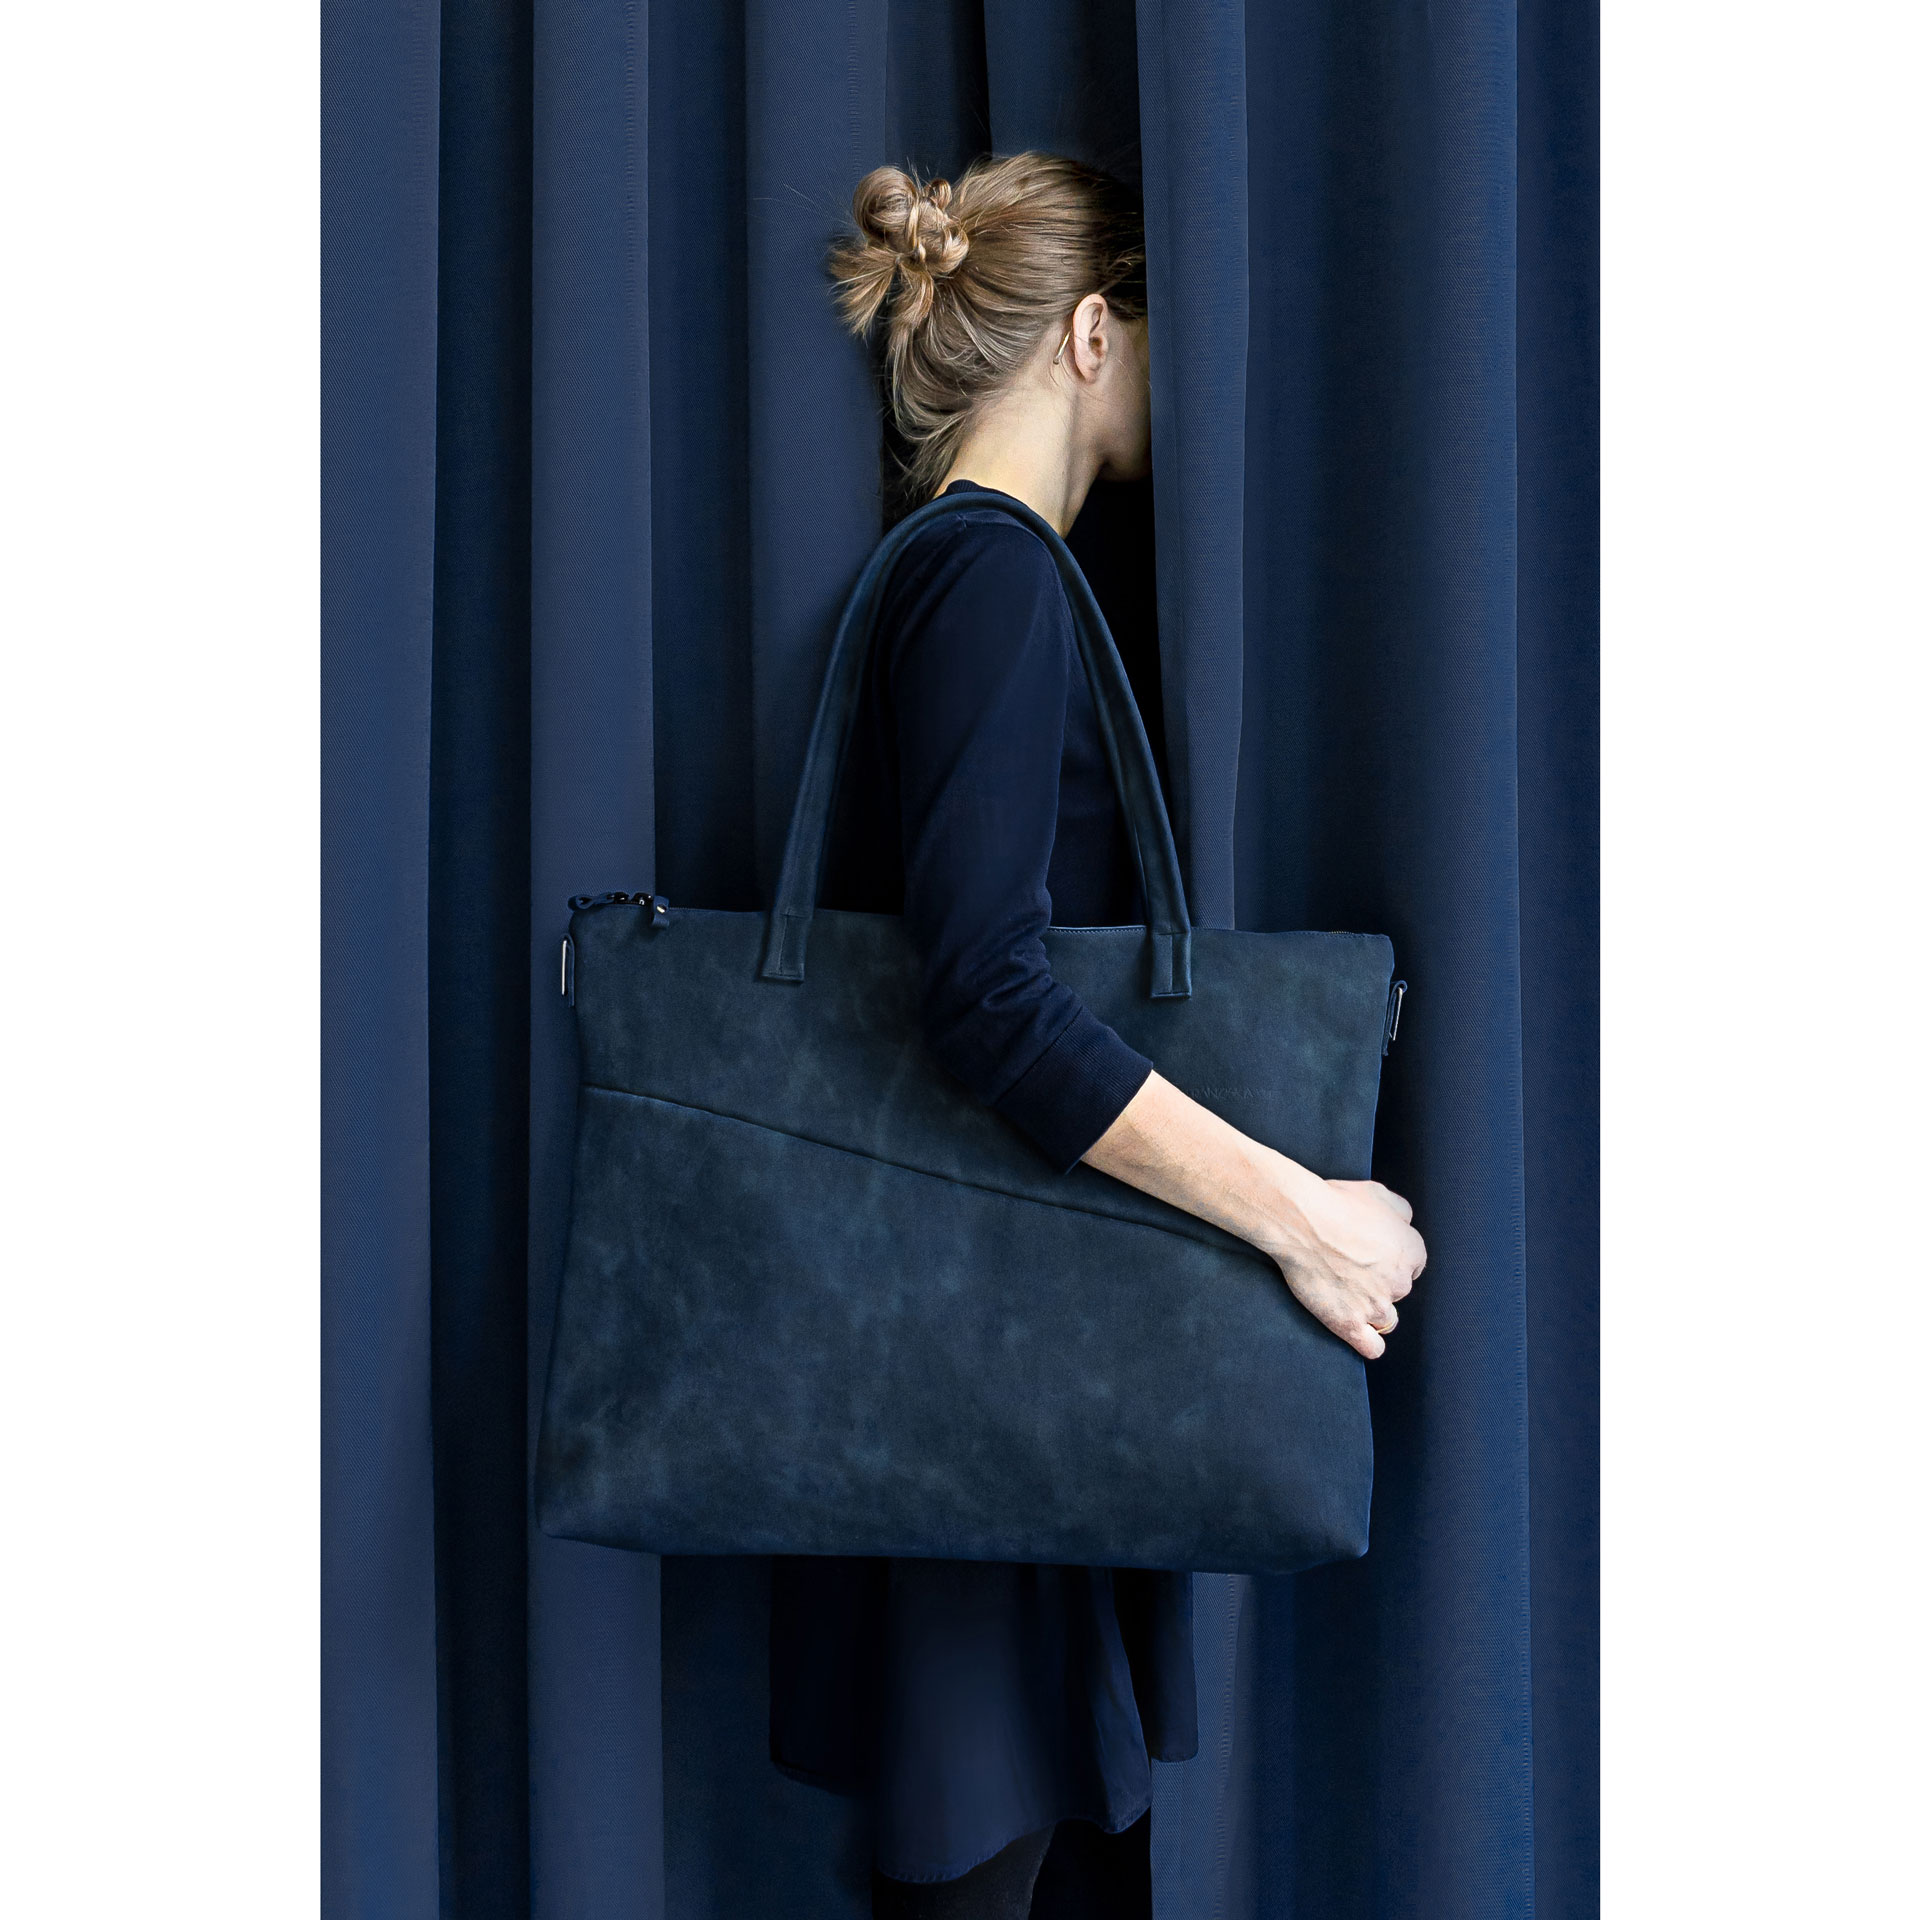 Model vor dunkelblauem Vorhang trägt XXL-Shopper ELA aus Naturleder in Dunkelblau über der Schulter